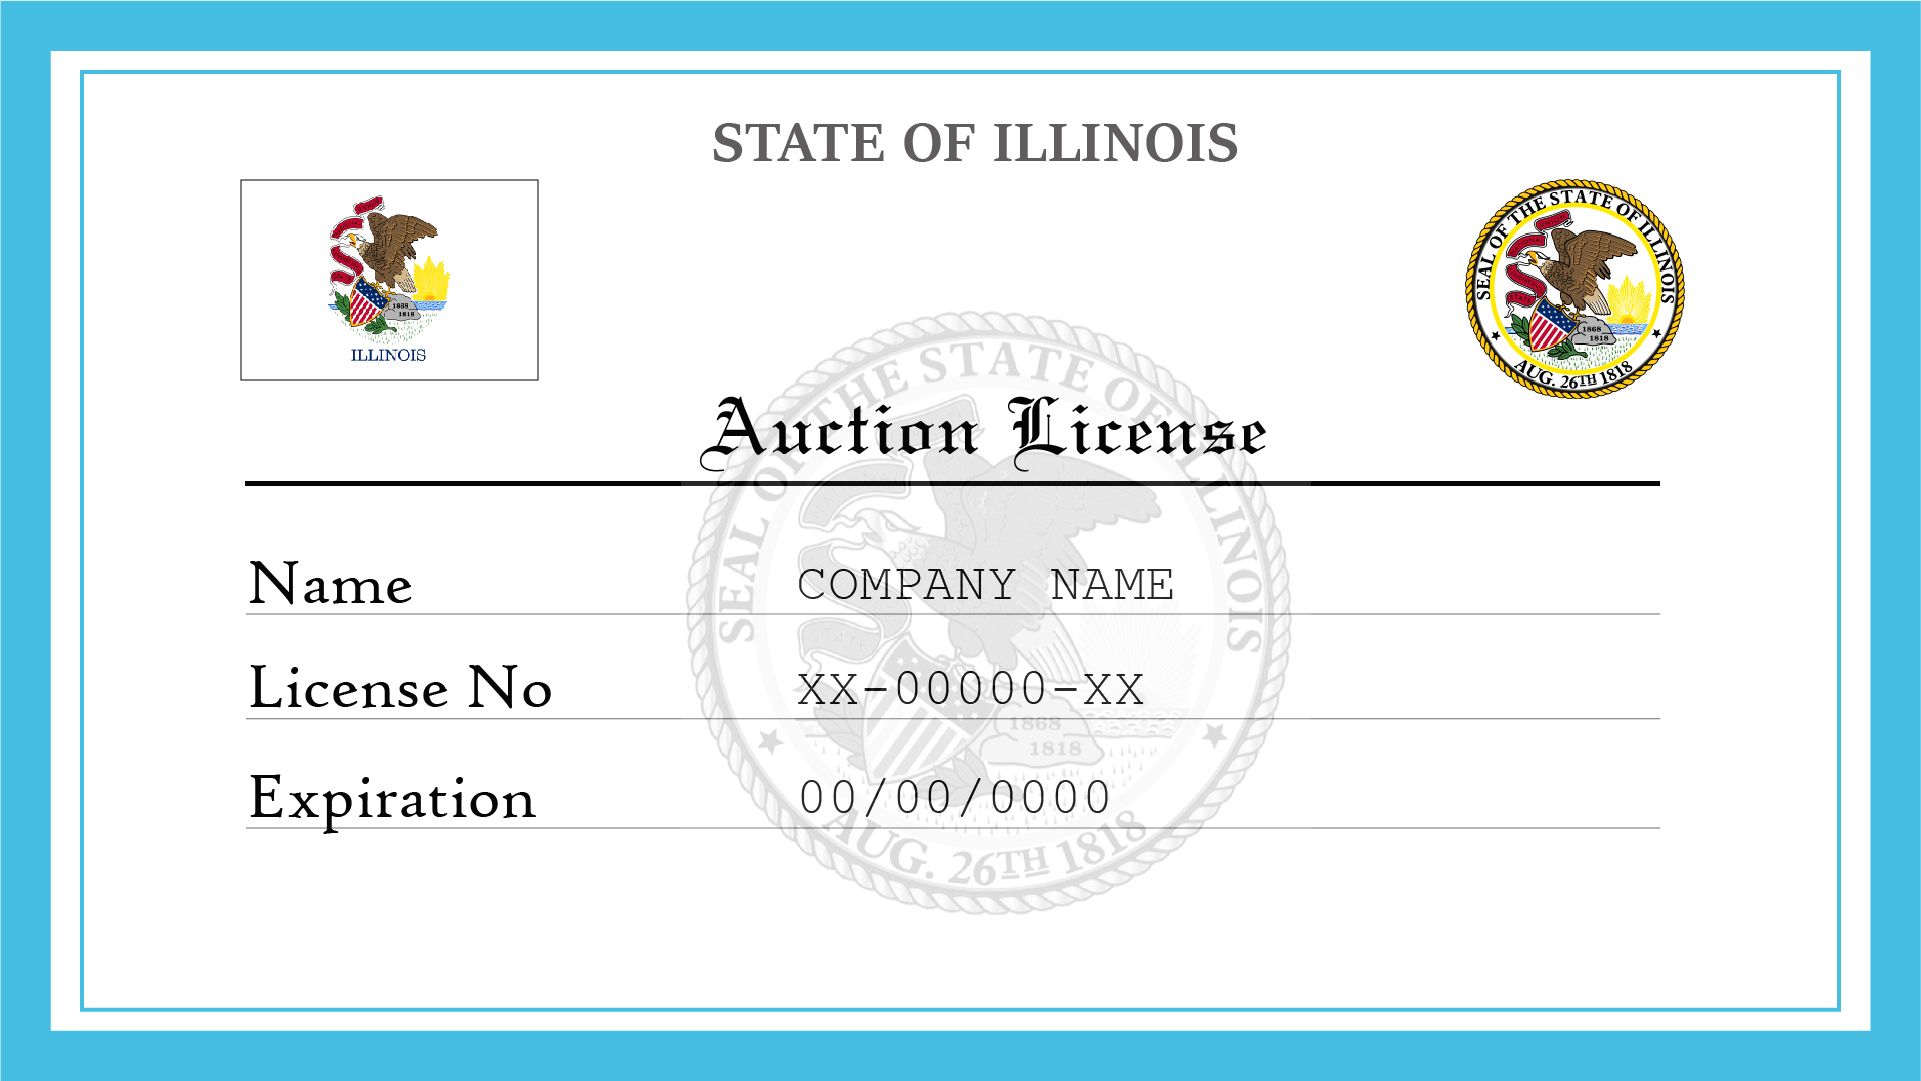 Illinois Auction License License Lookup